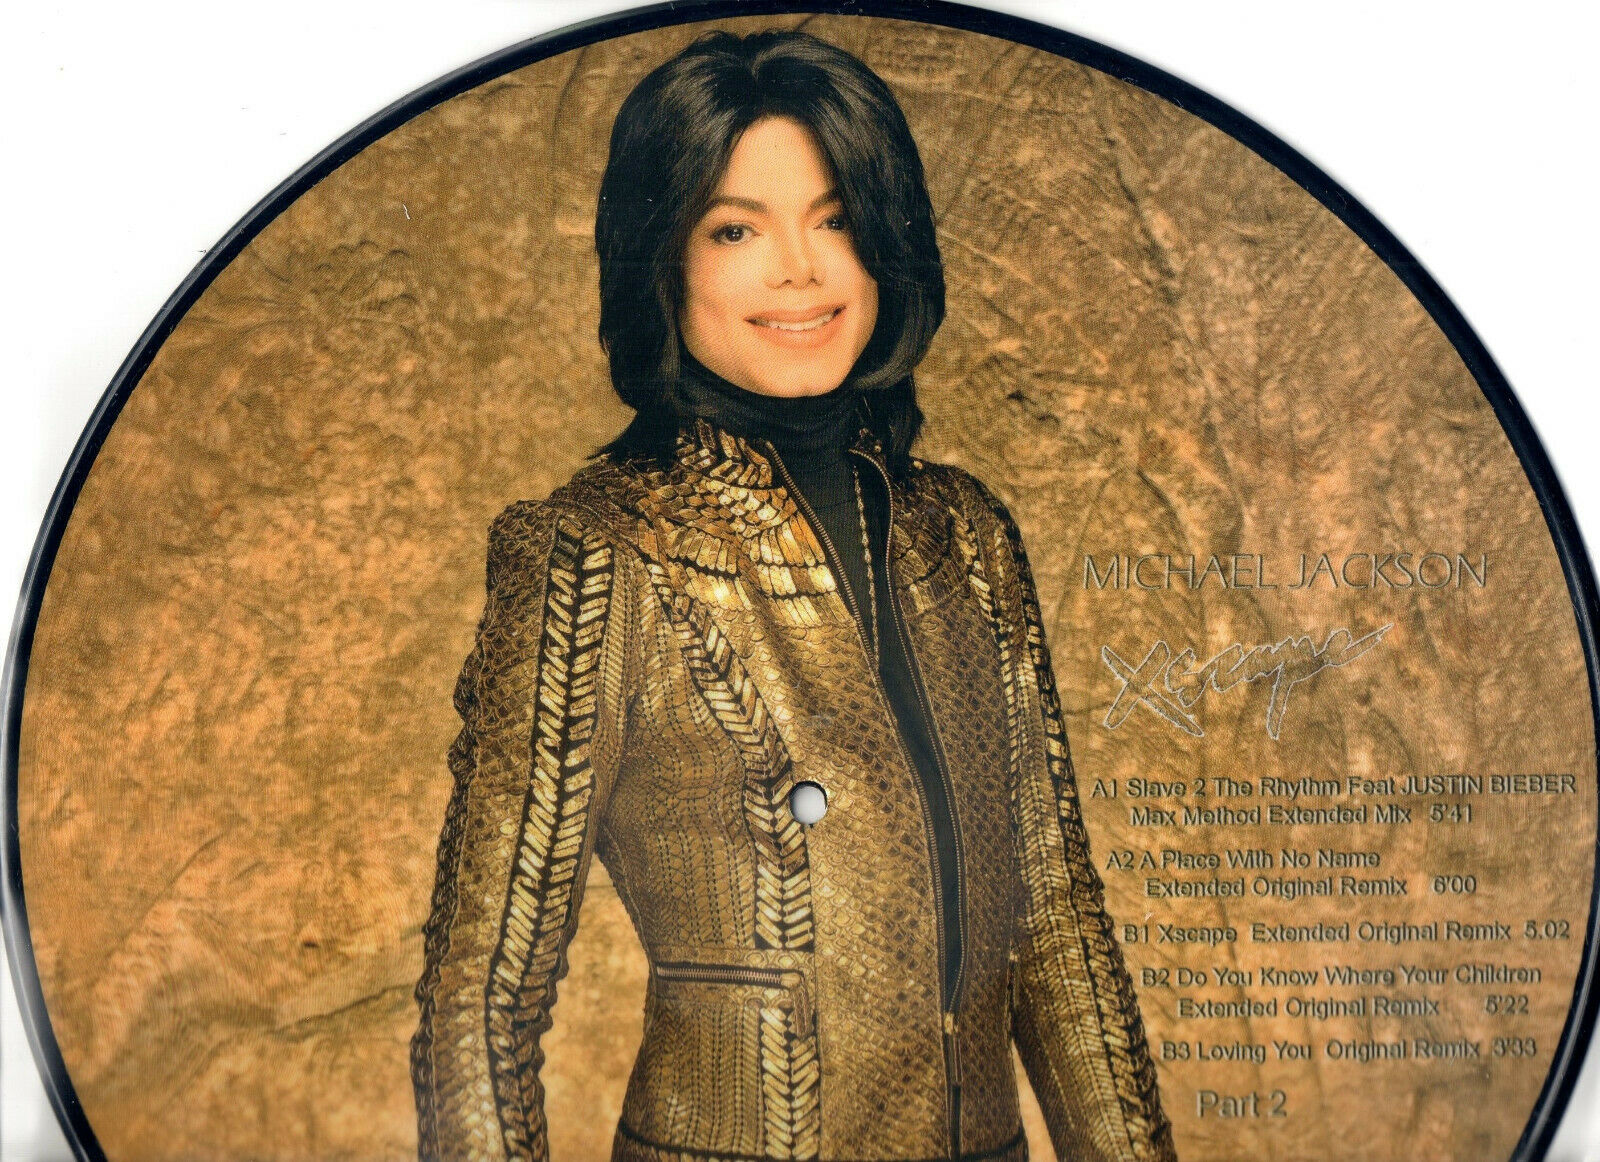 Michael Jackson - Vinilo Xscape (Vinilo)